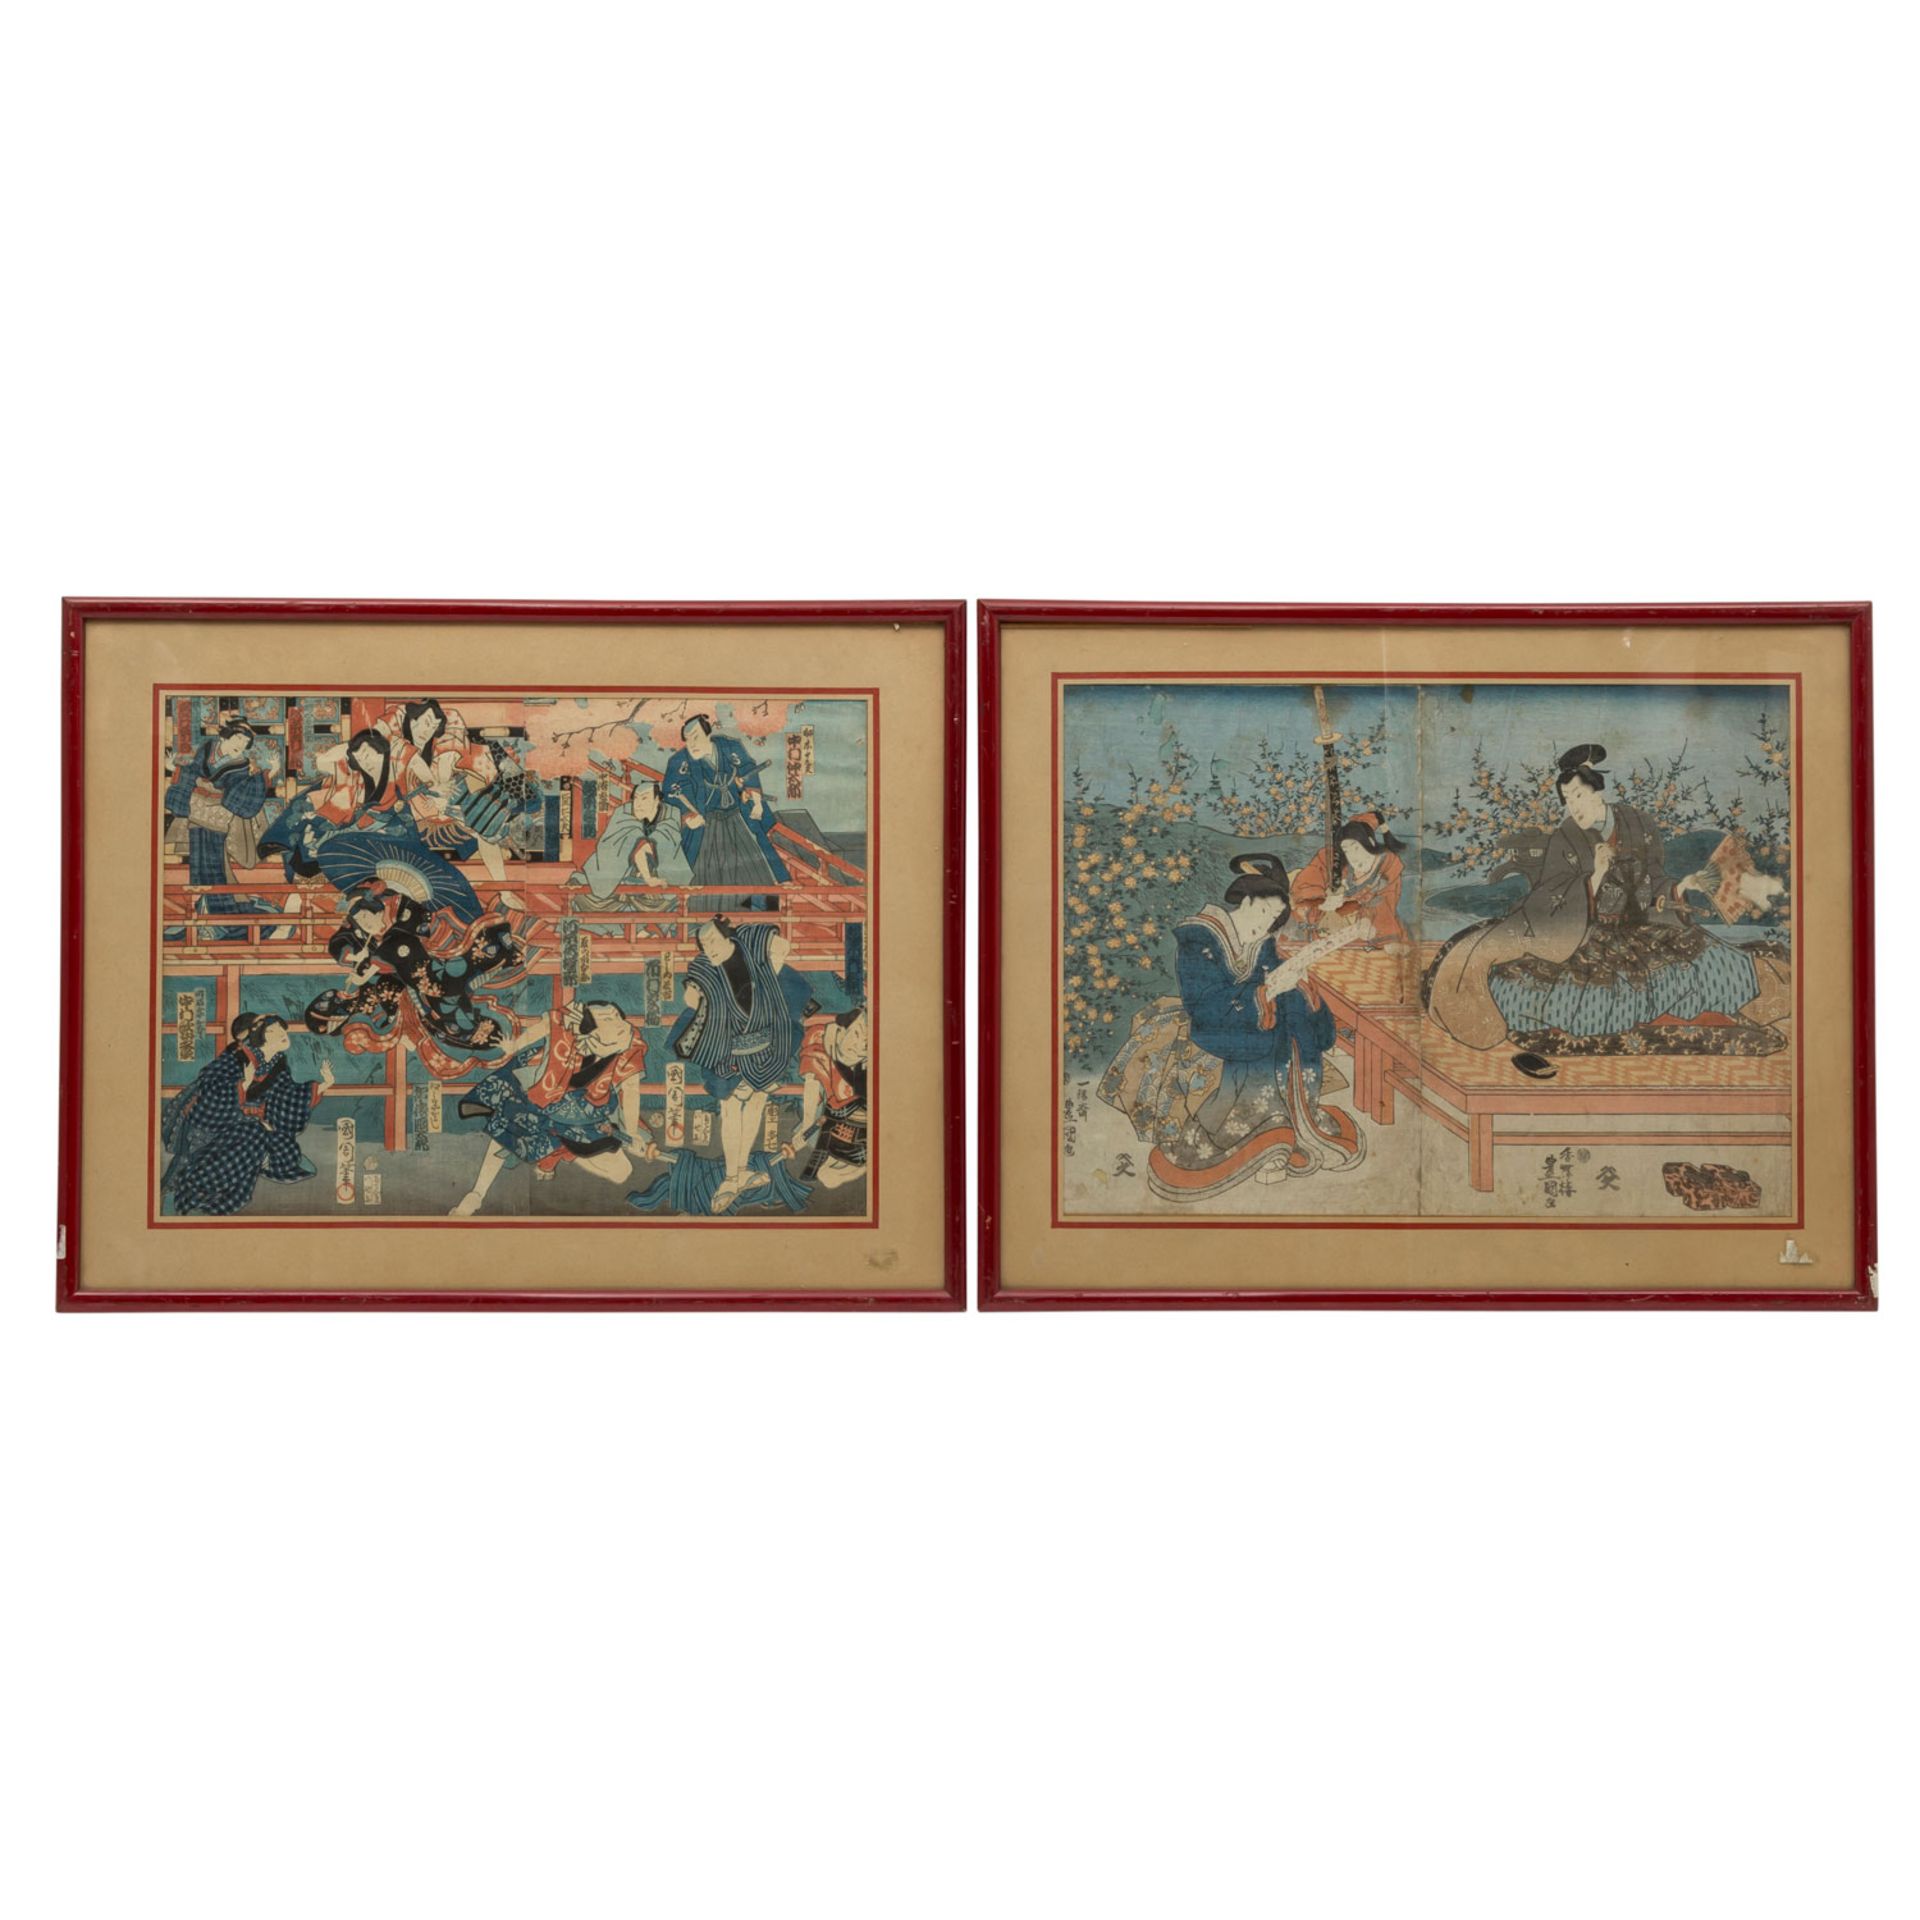 Paar Farbholzschnitte. JAPAN, Meiji-Zeit (1868-1912)Gerahmt, 47x58,5 cm, besch..Two colored wooden